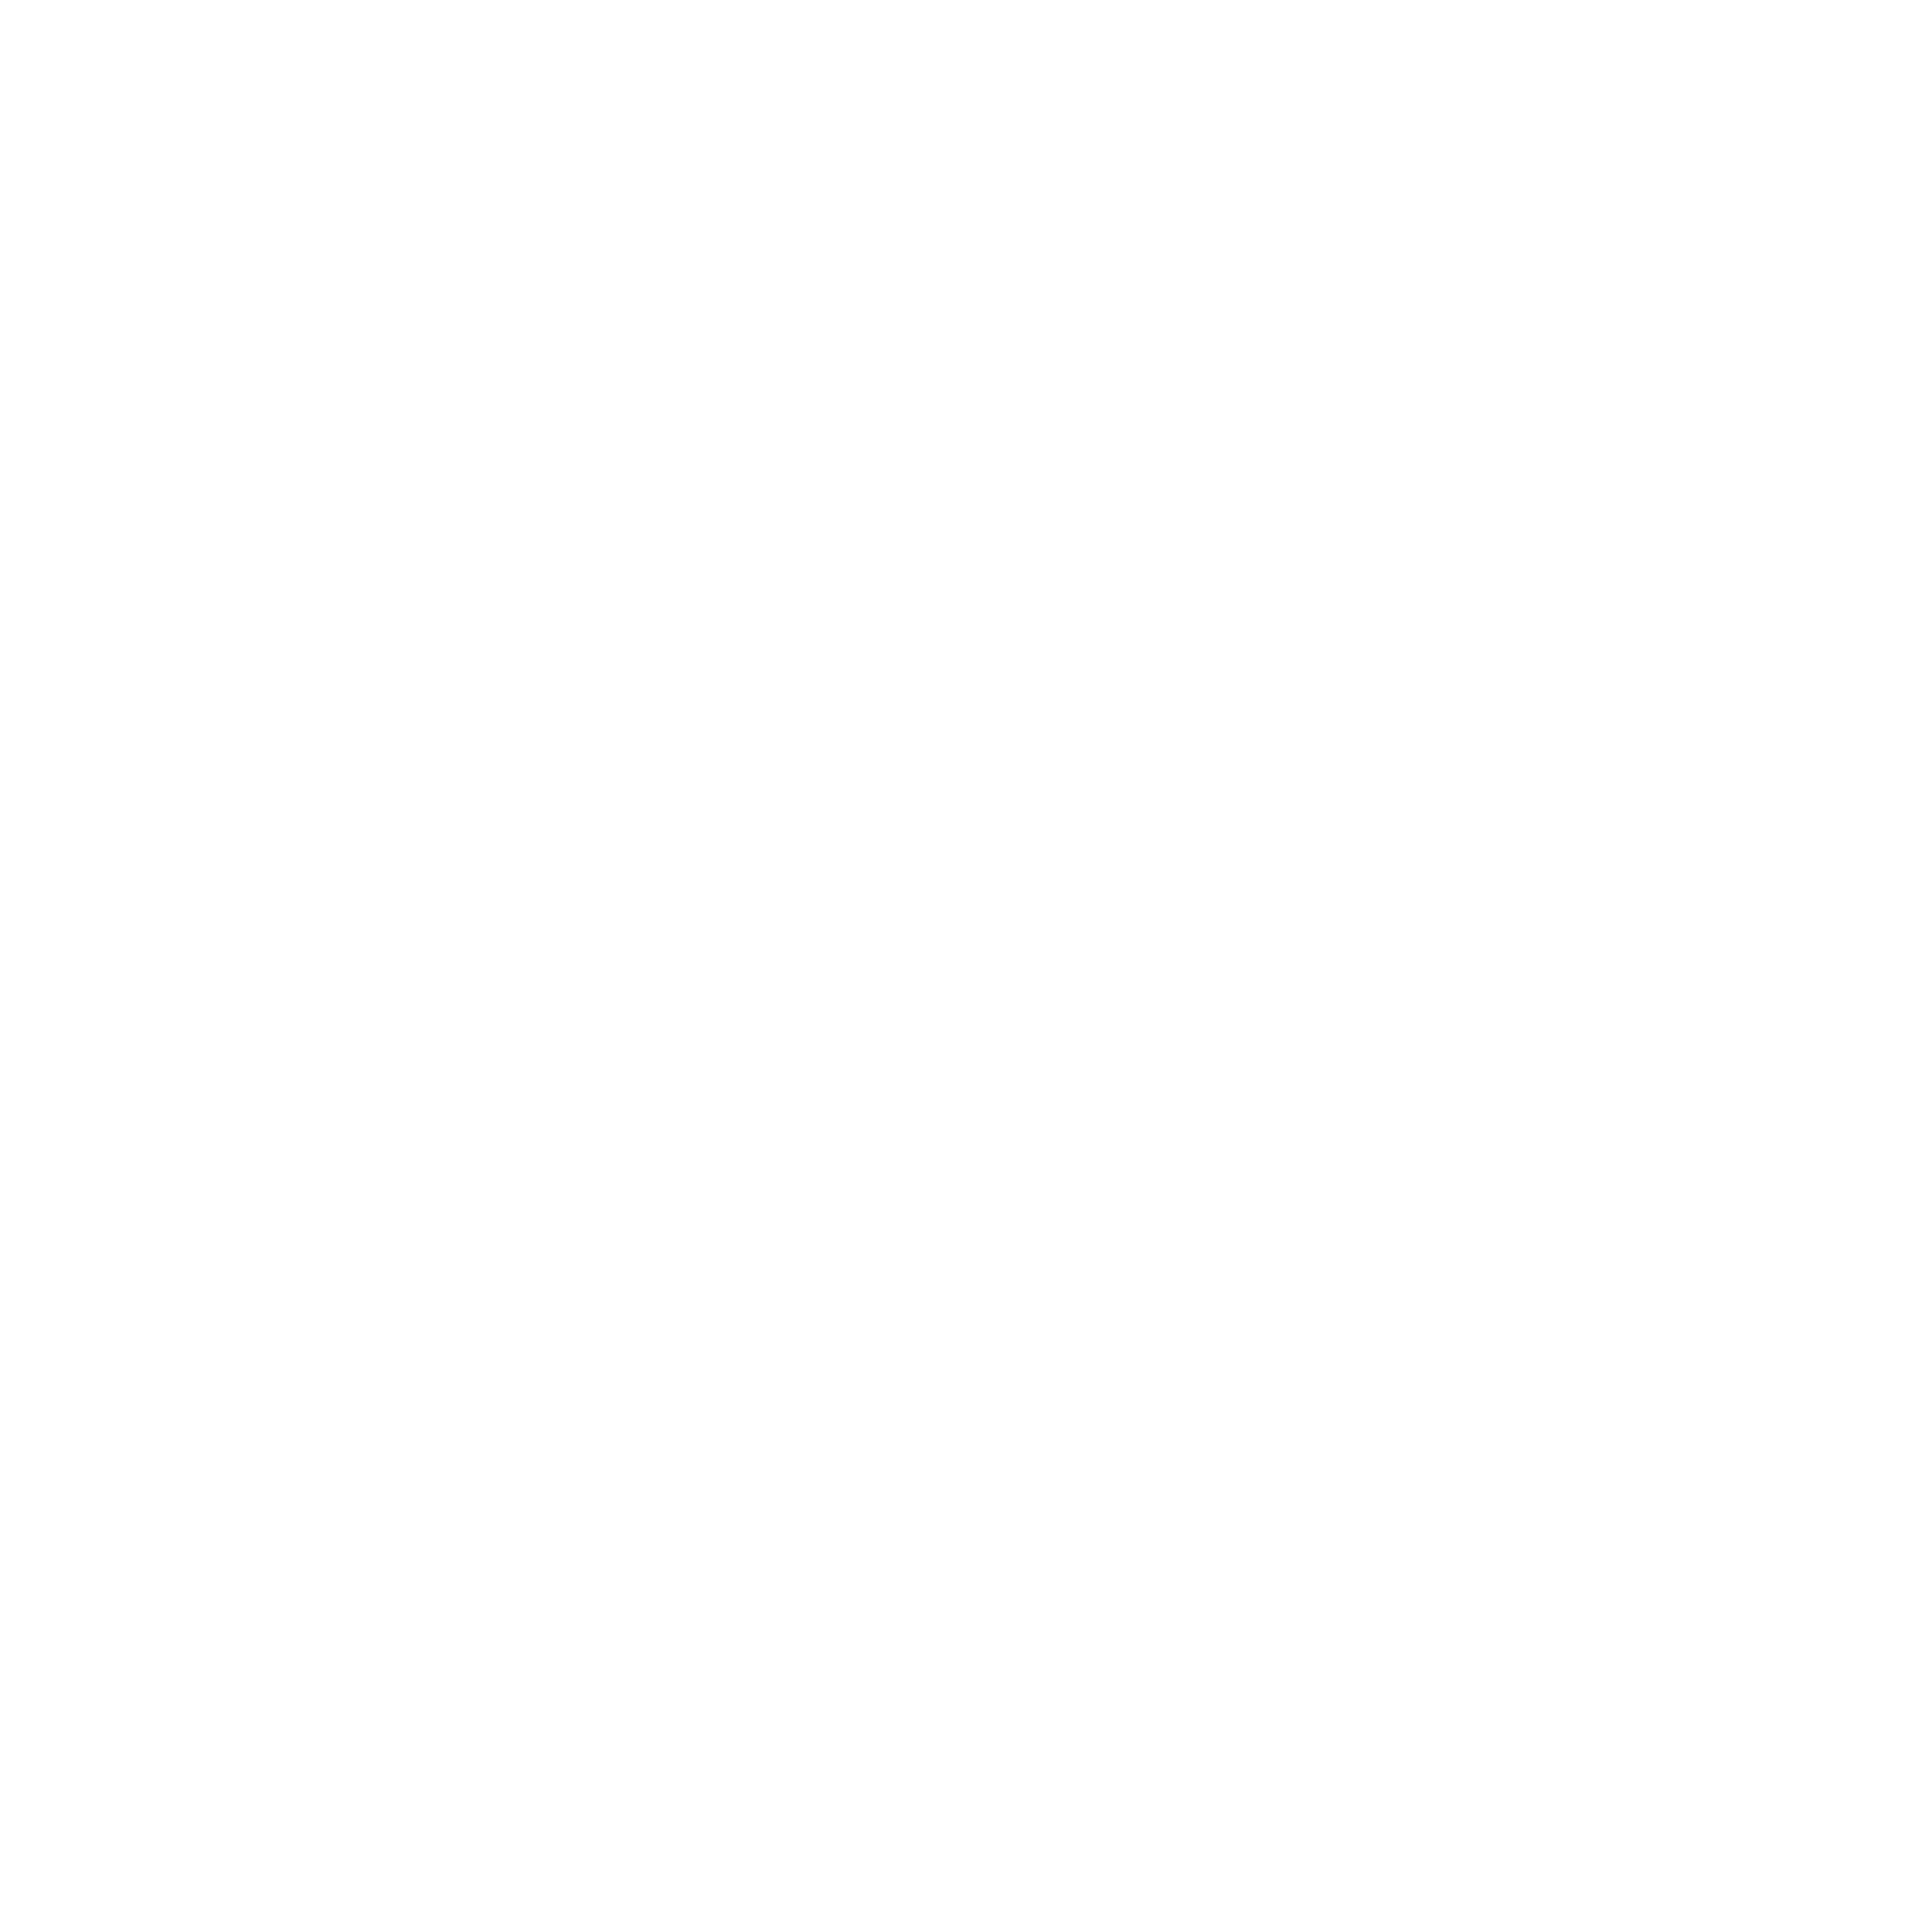 logo shift